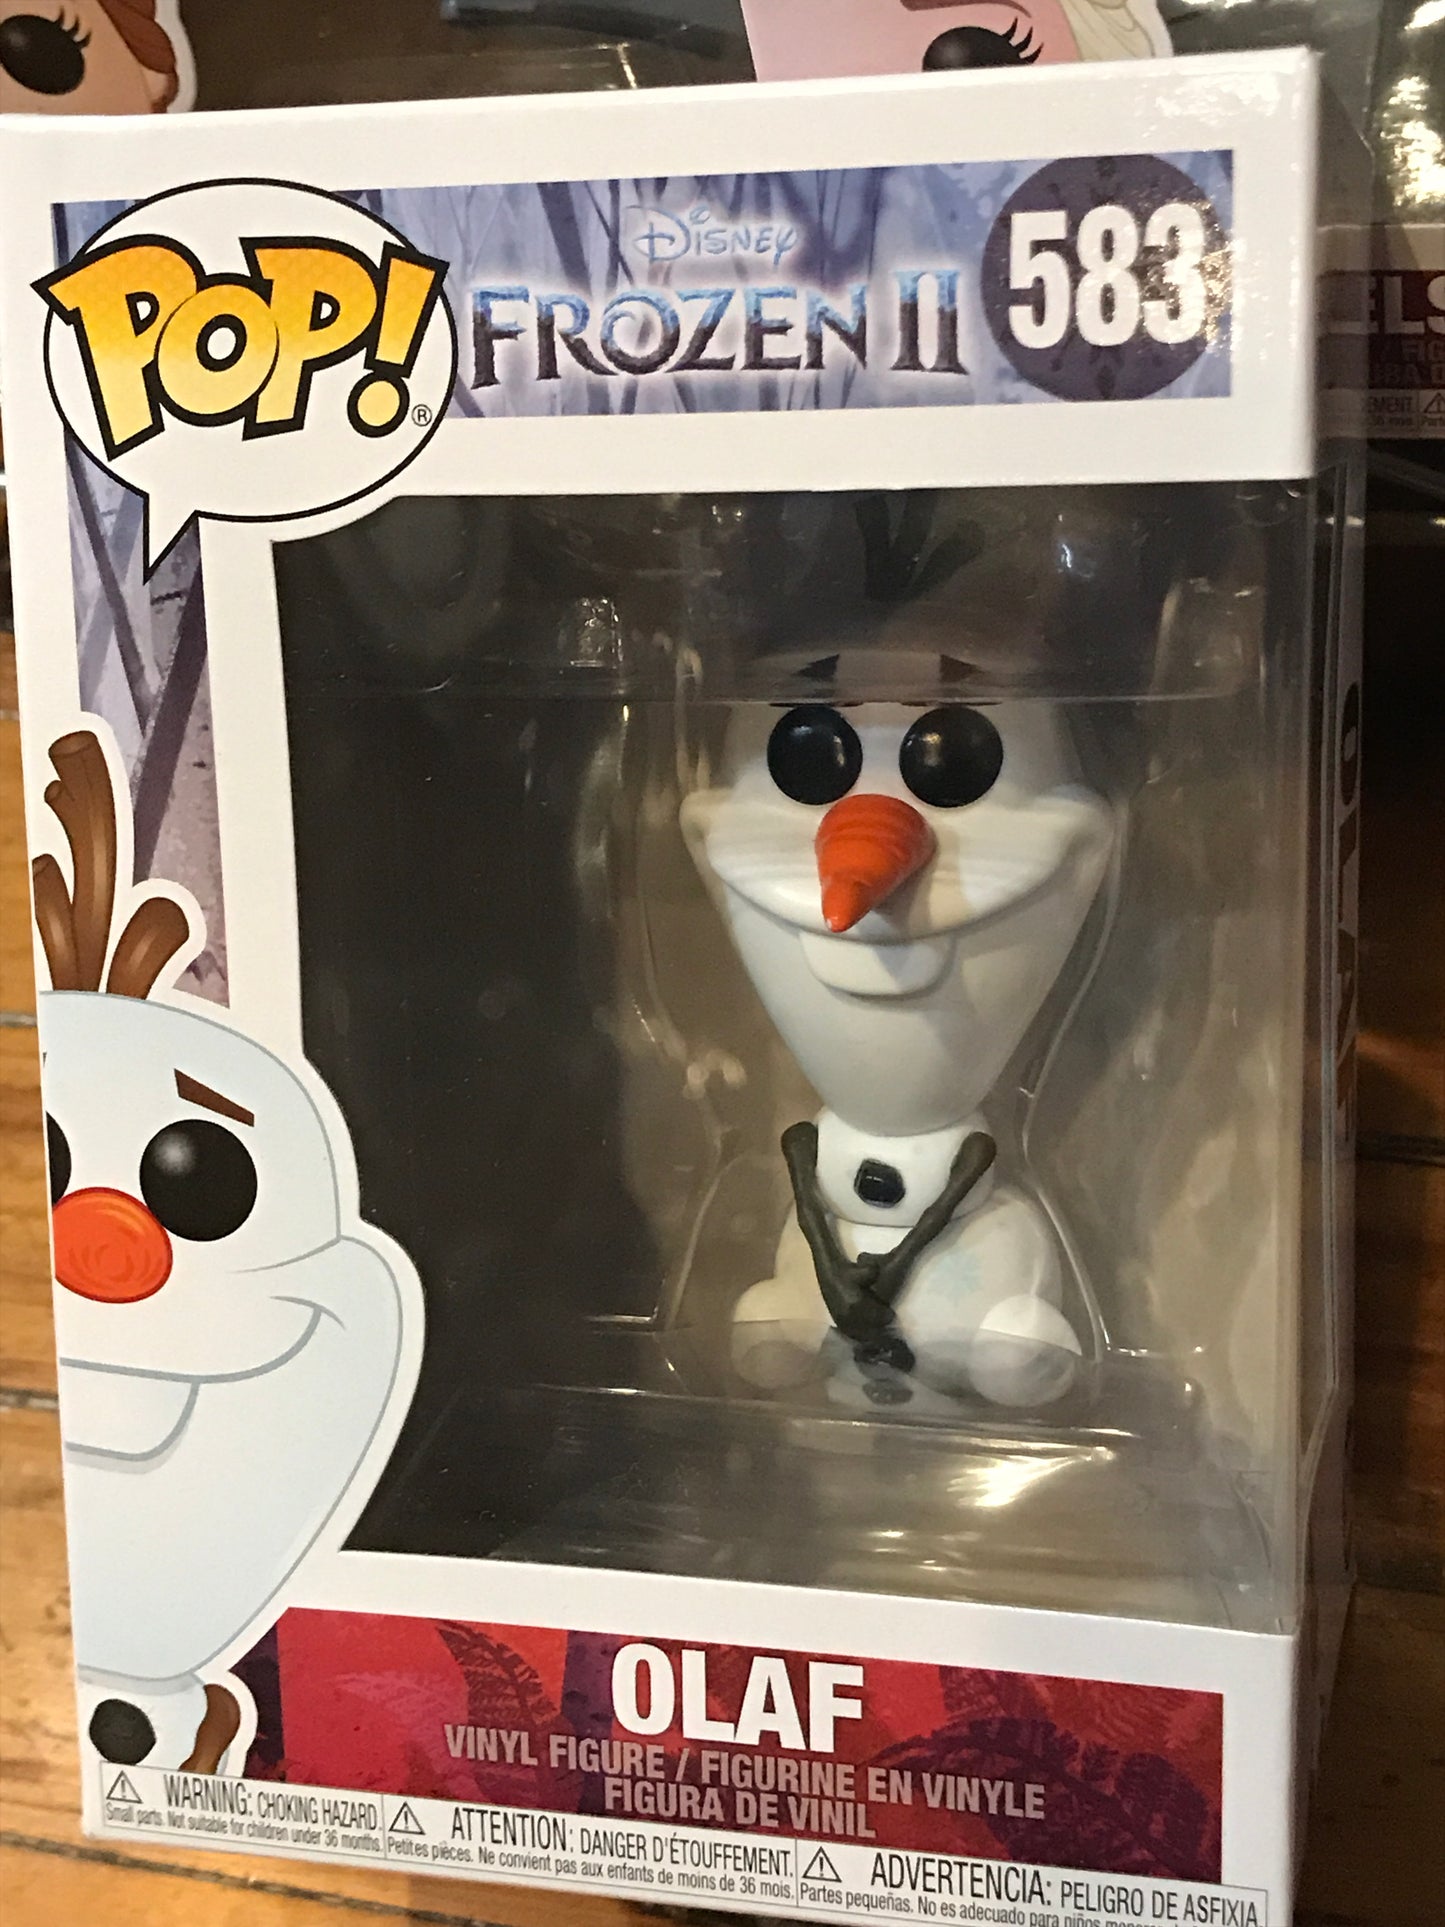 Frozen 2 Olaf 583 Funko Pop! Vinyl figure new Disney